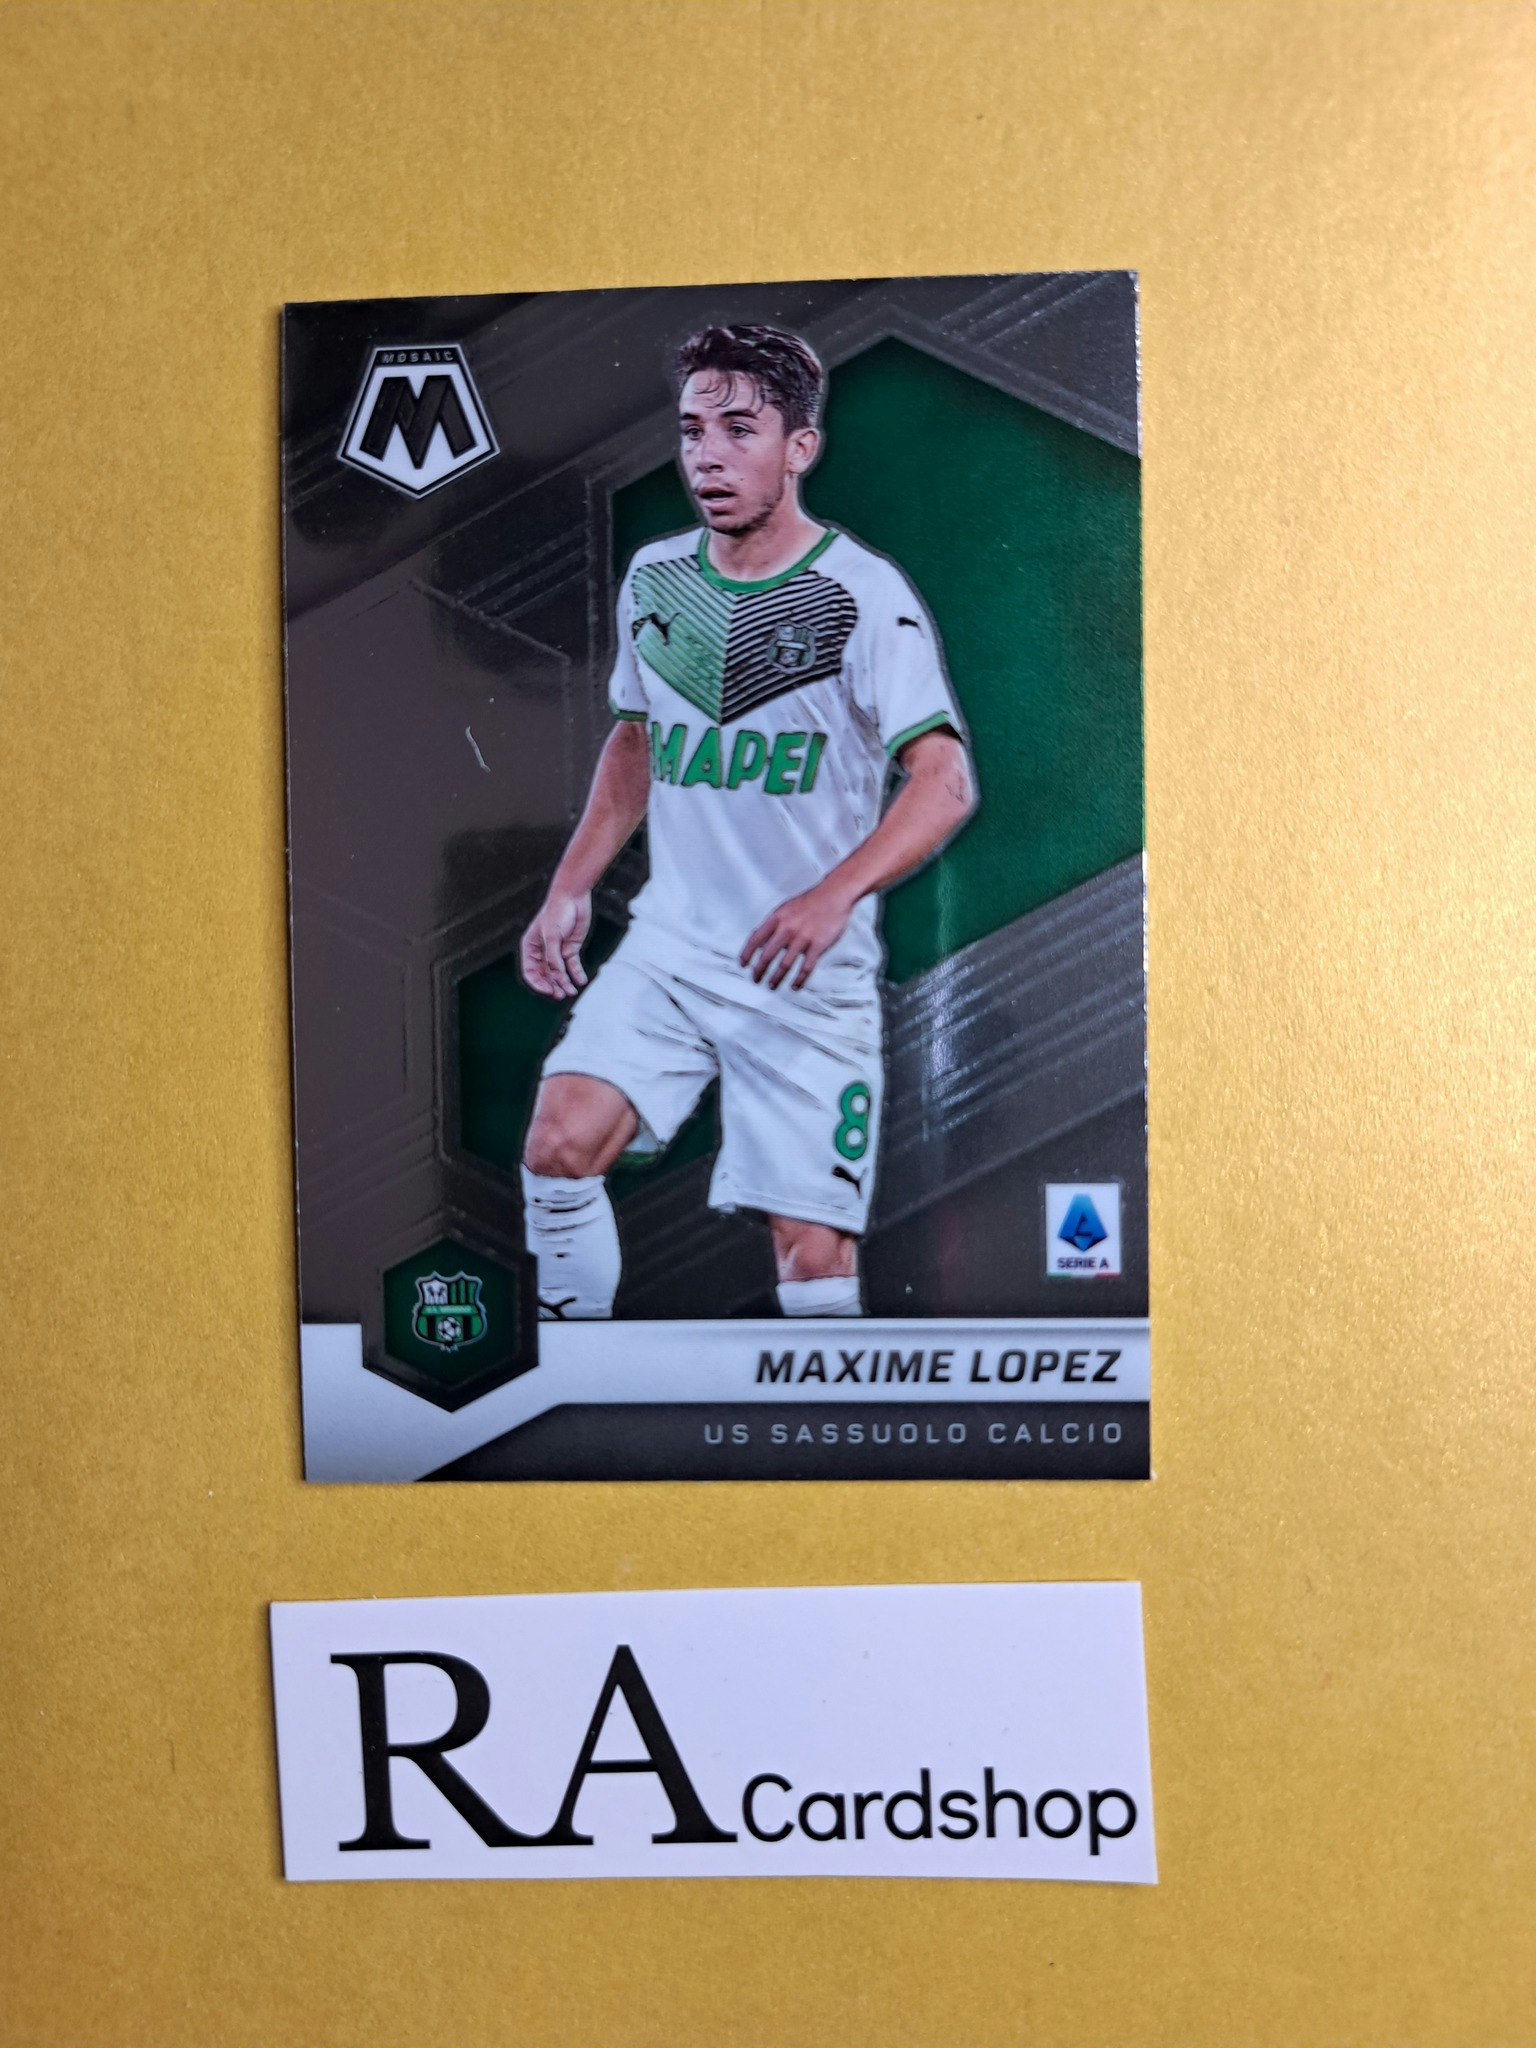 #104 Maxime Lopez 2021-22 Panini Mosaic Serie A Soccer Fotboll